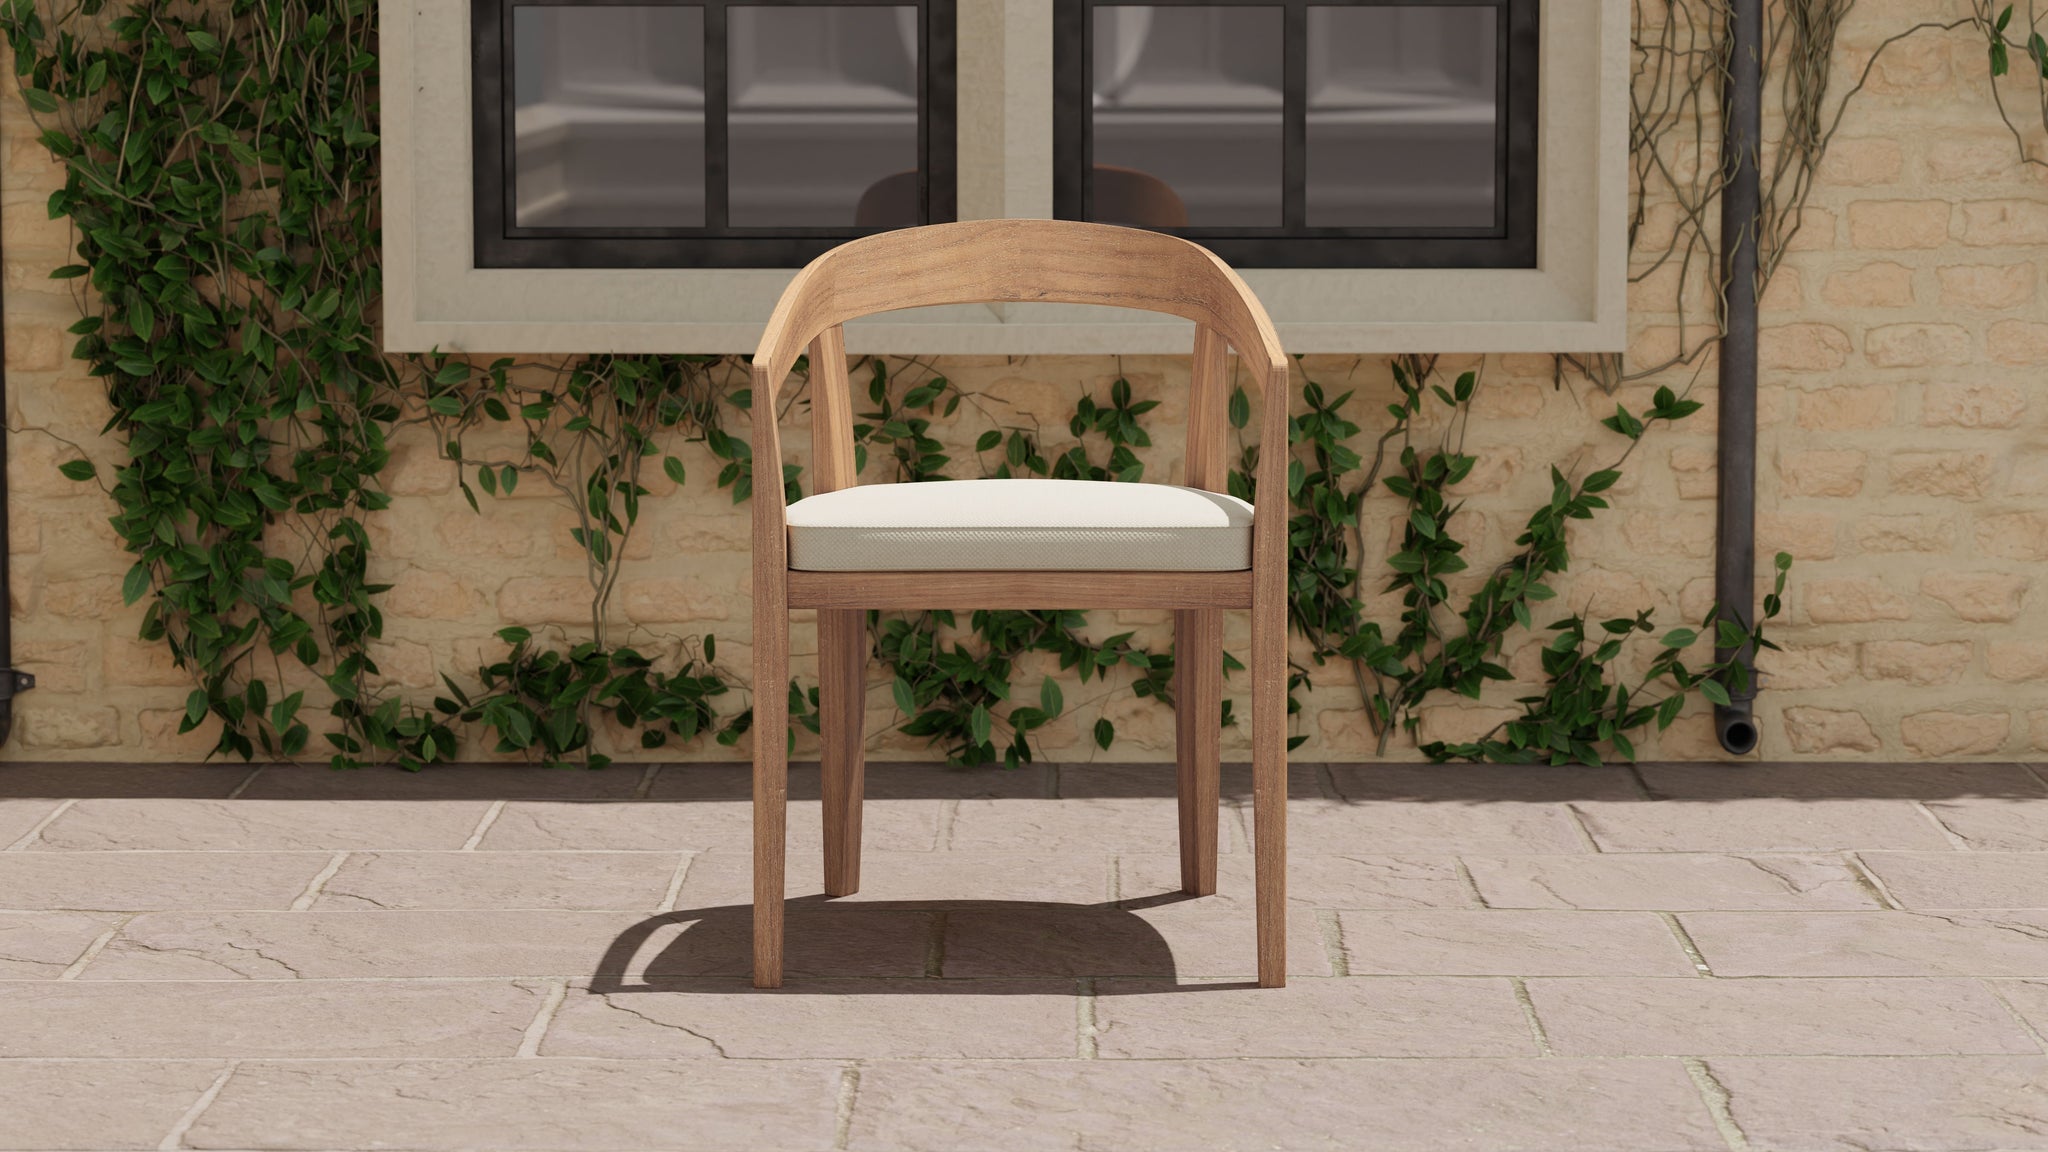 Windsor Teak Garden Carver Chair with Ecru Cushion